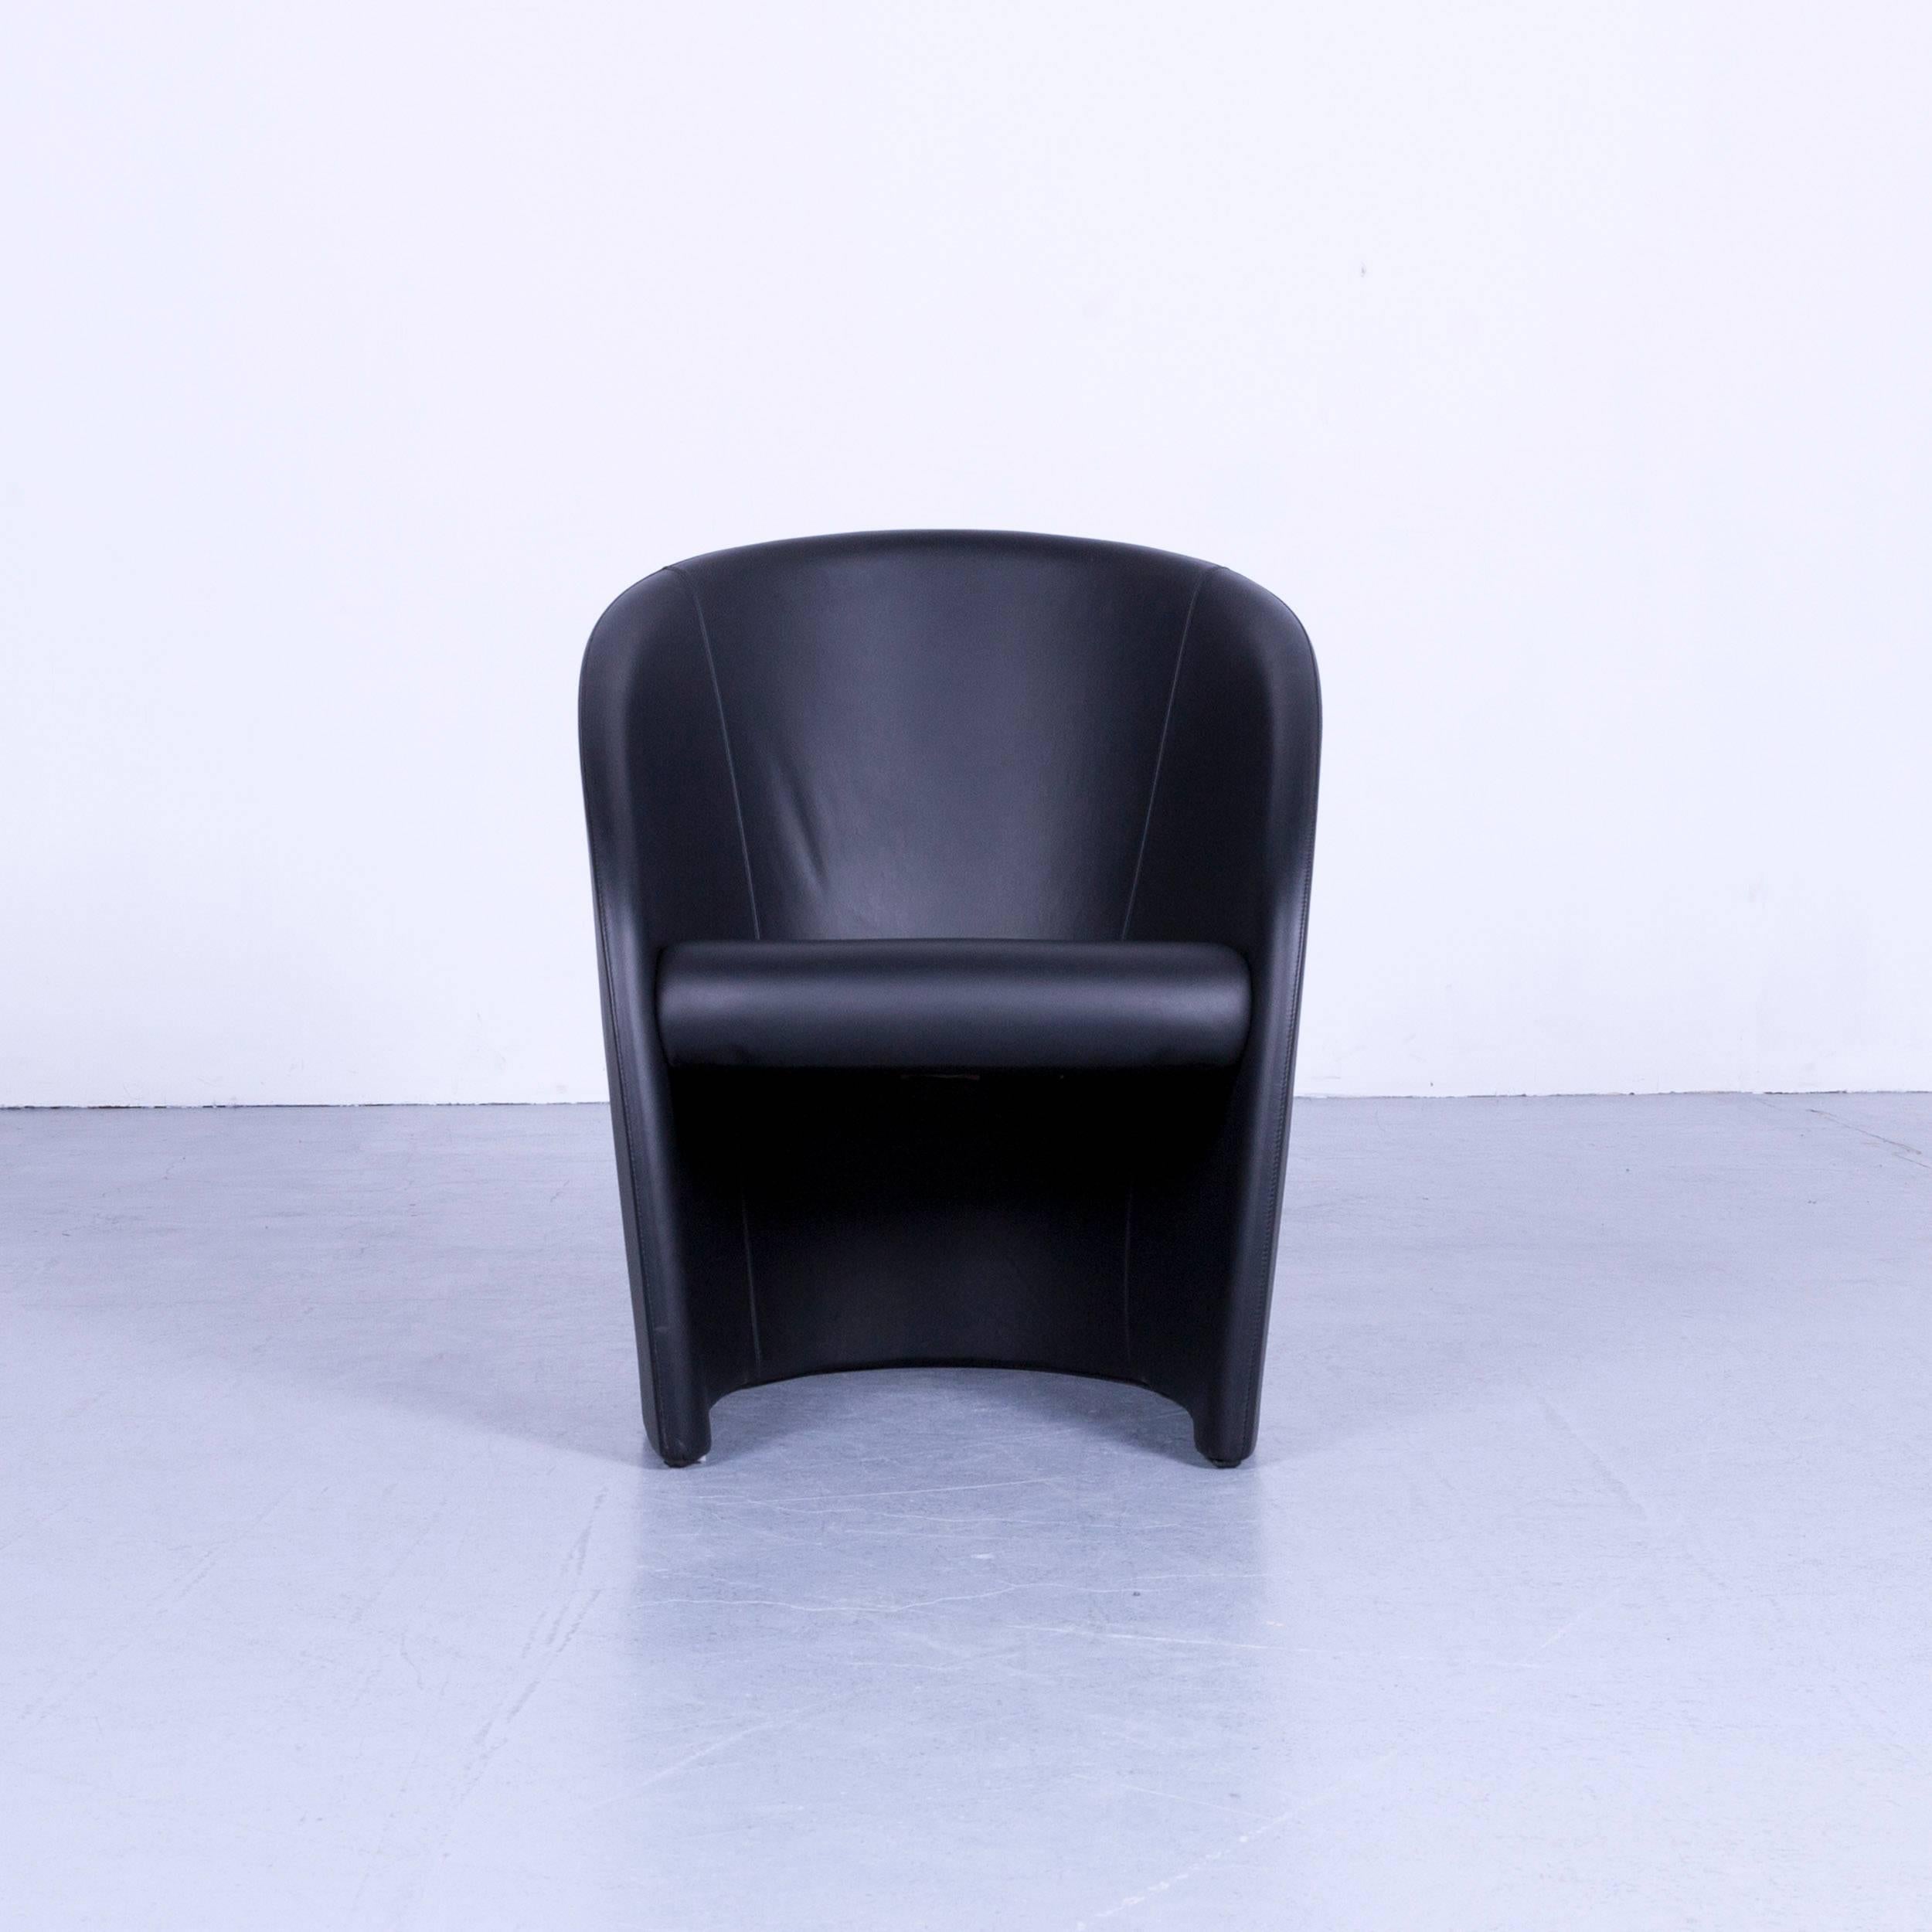 Chesterfield Poltrona Frau Intervista Designer Leather Armchair Black One-Seat